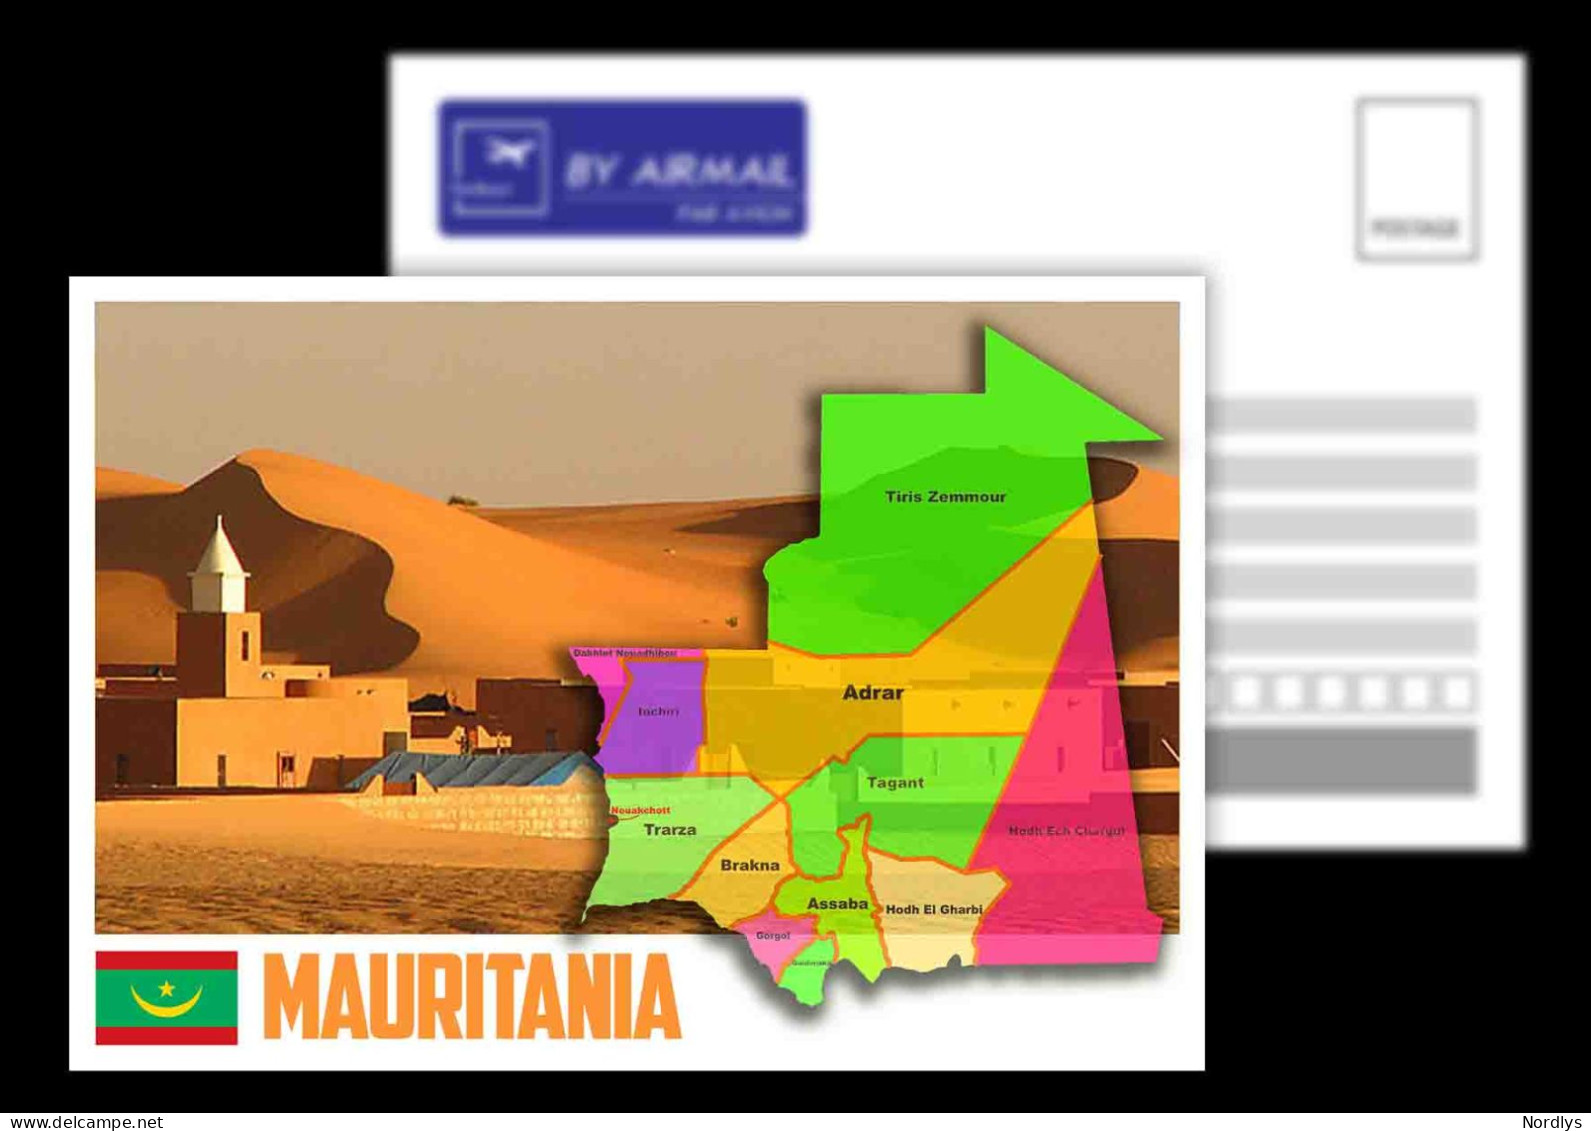 Mauritania / View Card / Map Card - Mauritania